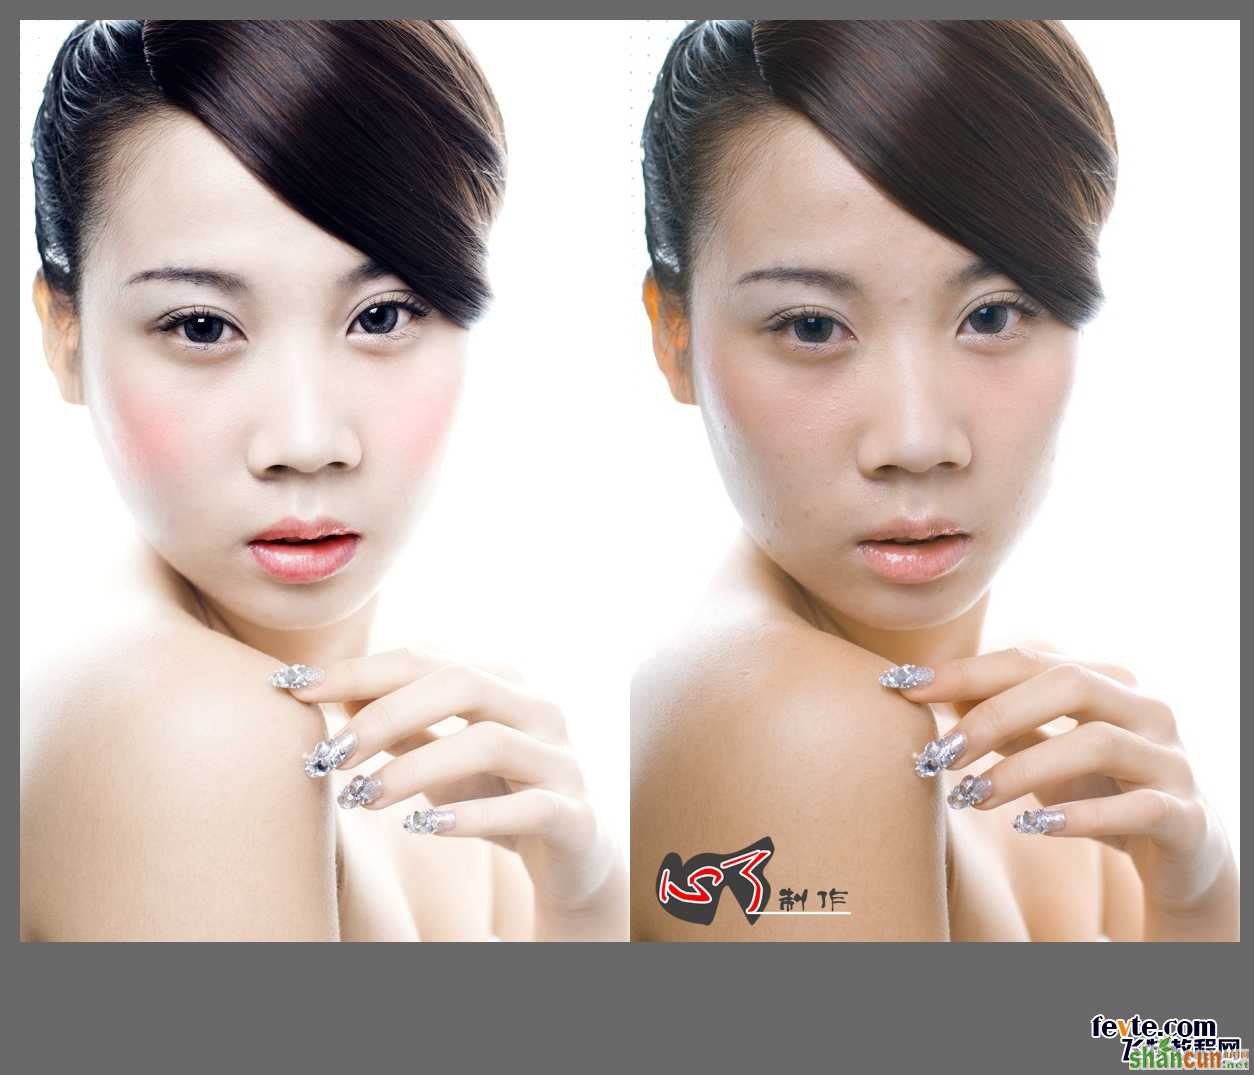 PS打造化妆品广告肌肤广告效果照片 山村